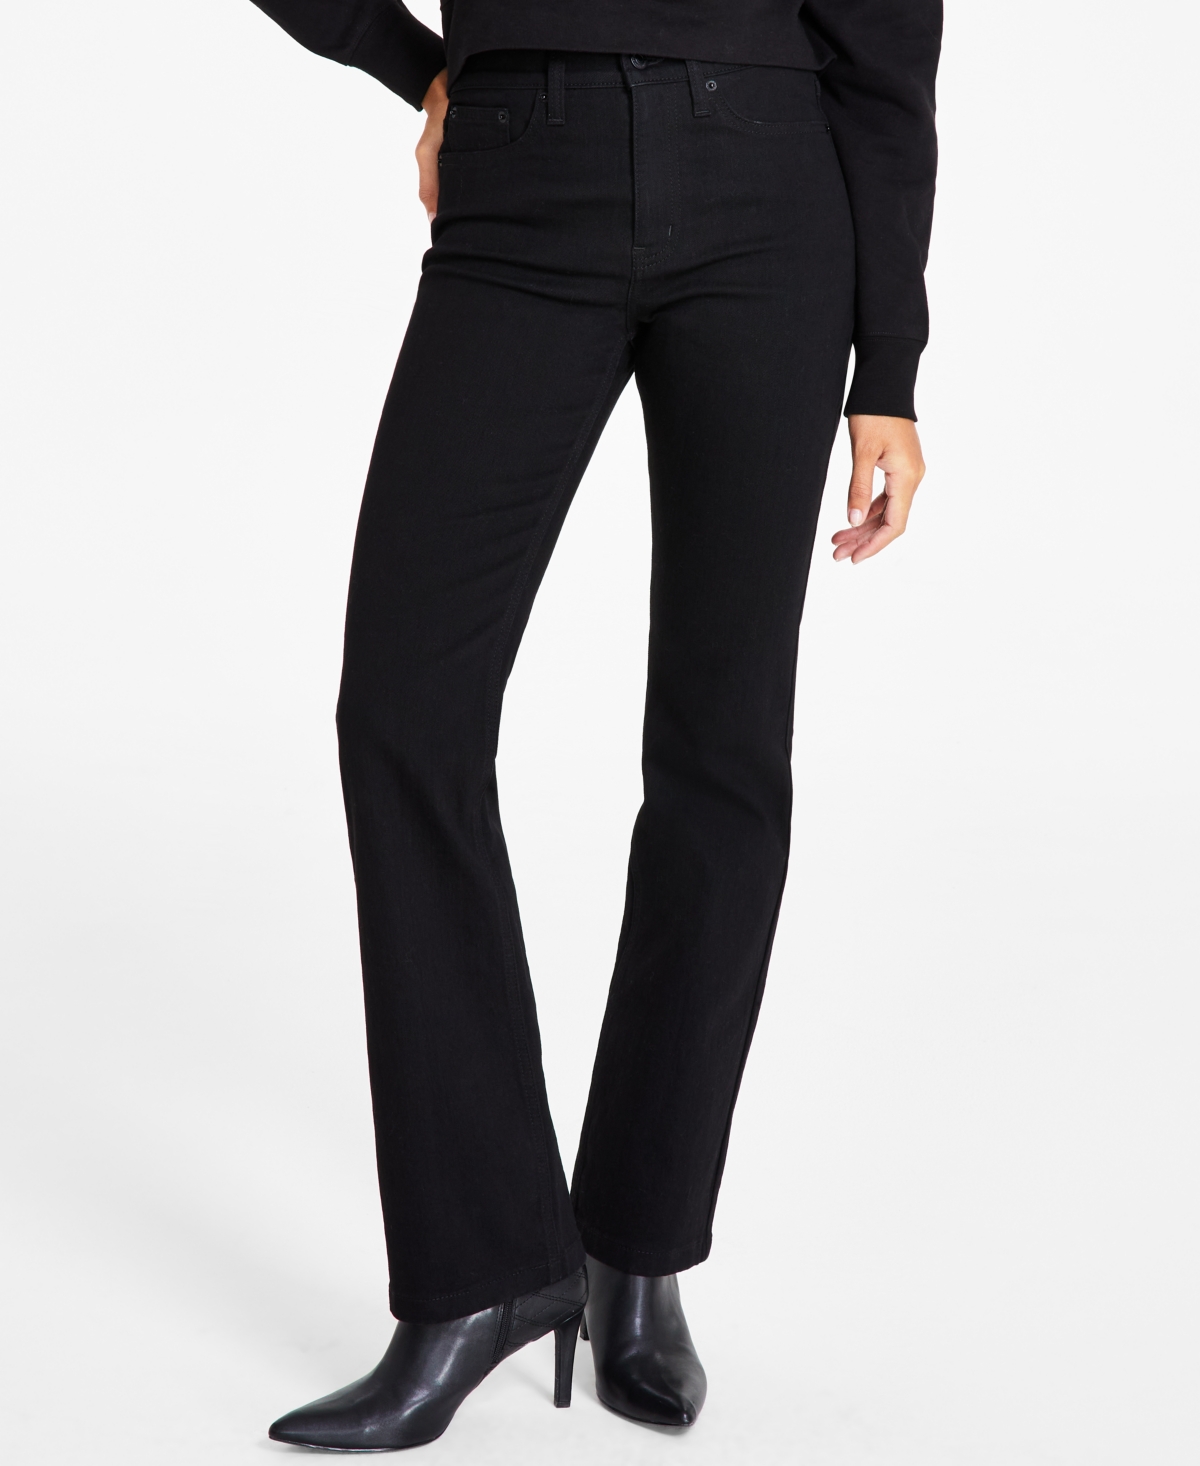 Women's High-Rise Whisper Soft Bootcut Jeans - Real Black